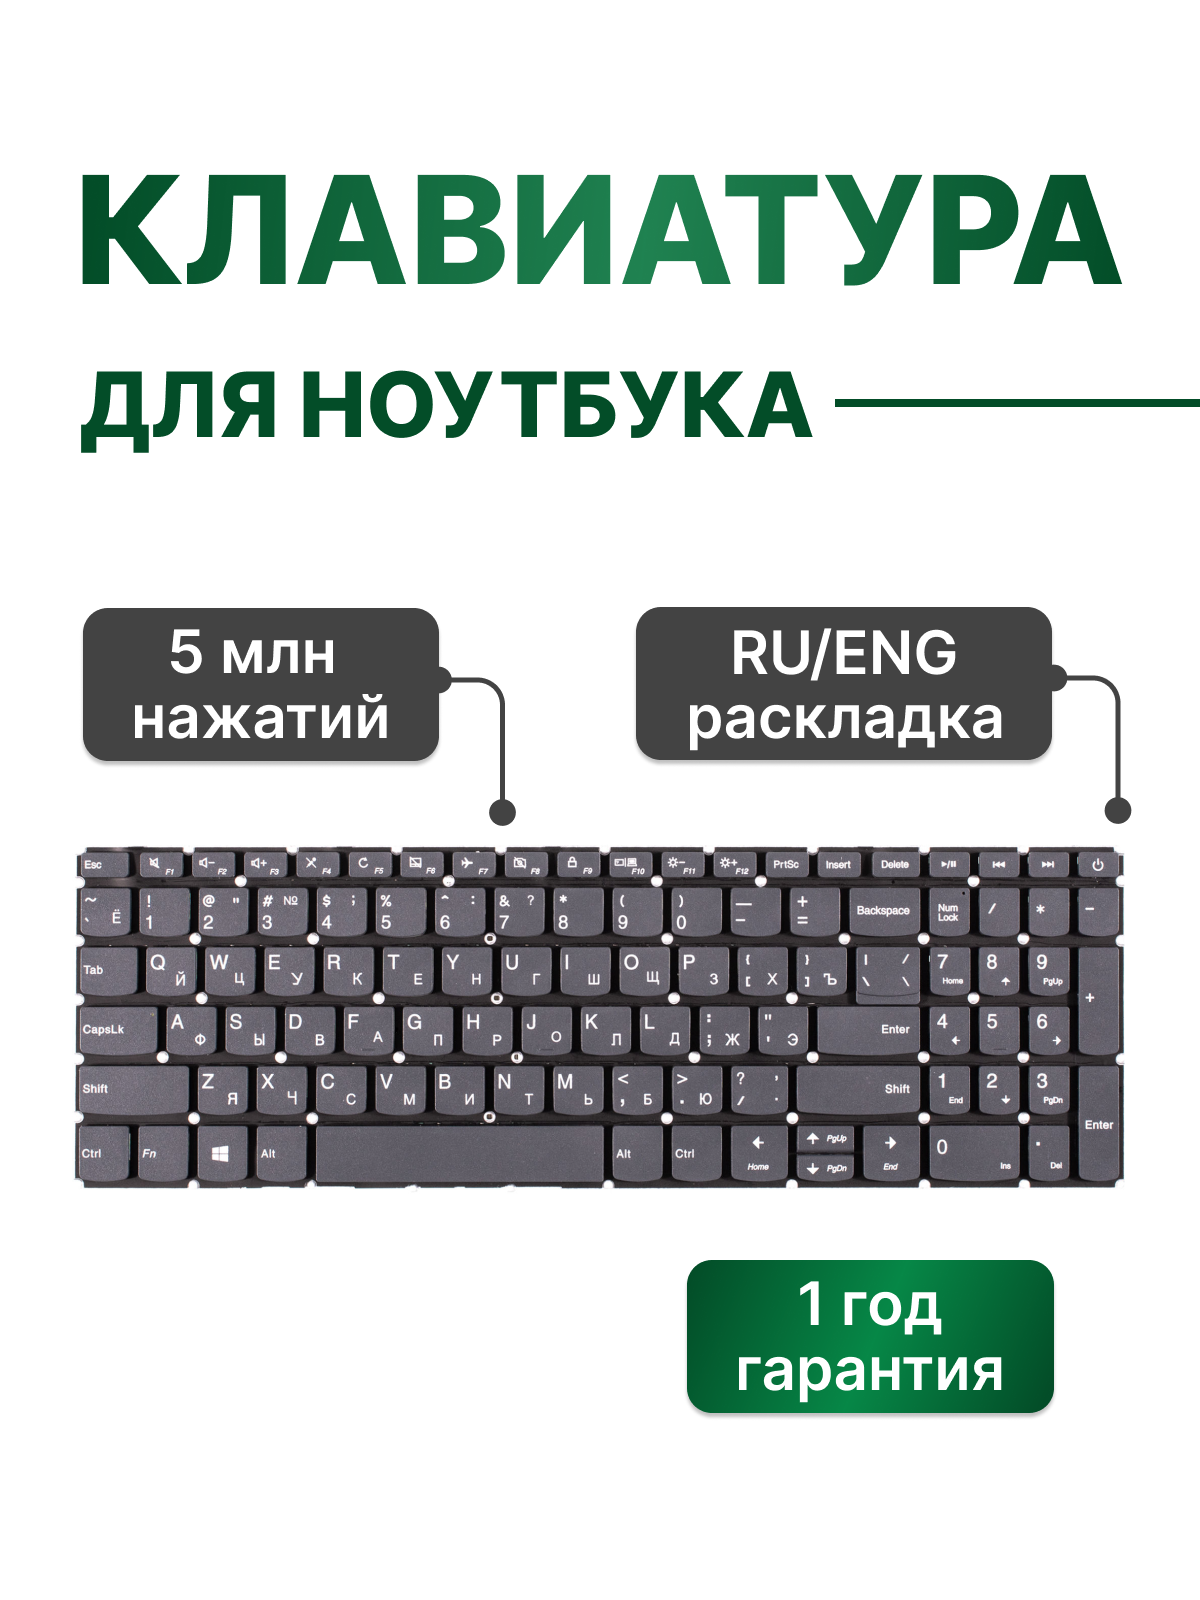 Клавиатура для Lenovo IdeaPad 330-15IKB, 320-15IKB, S145-15IWL, 320-15IAP, 330-15AST, 320-15ISK, 330-15ARR и др